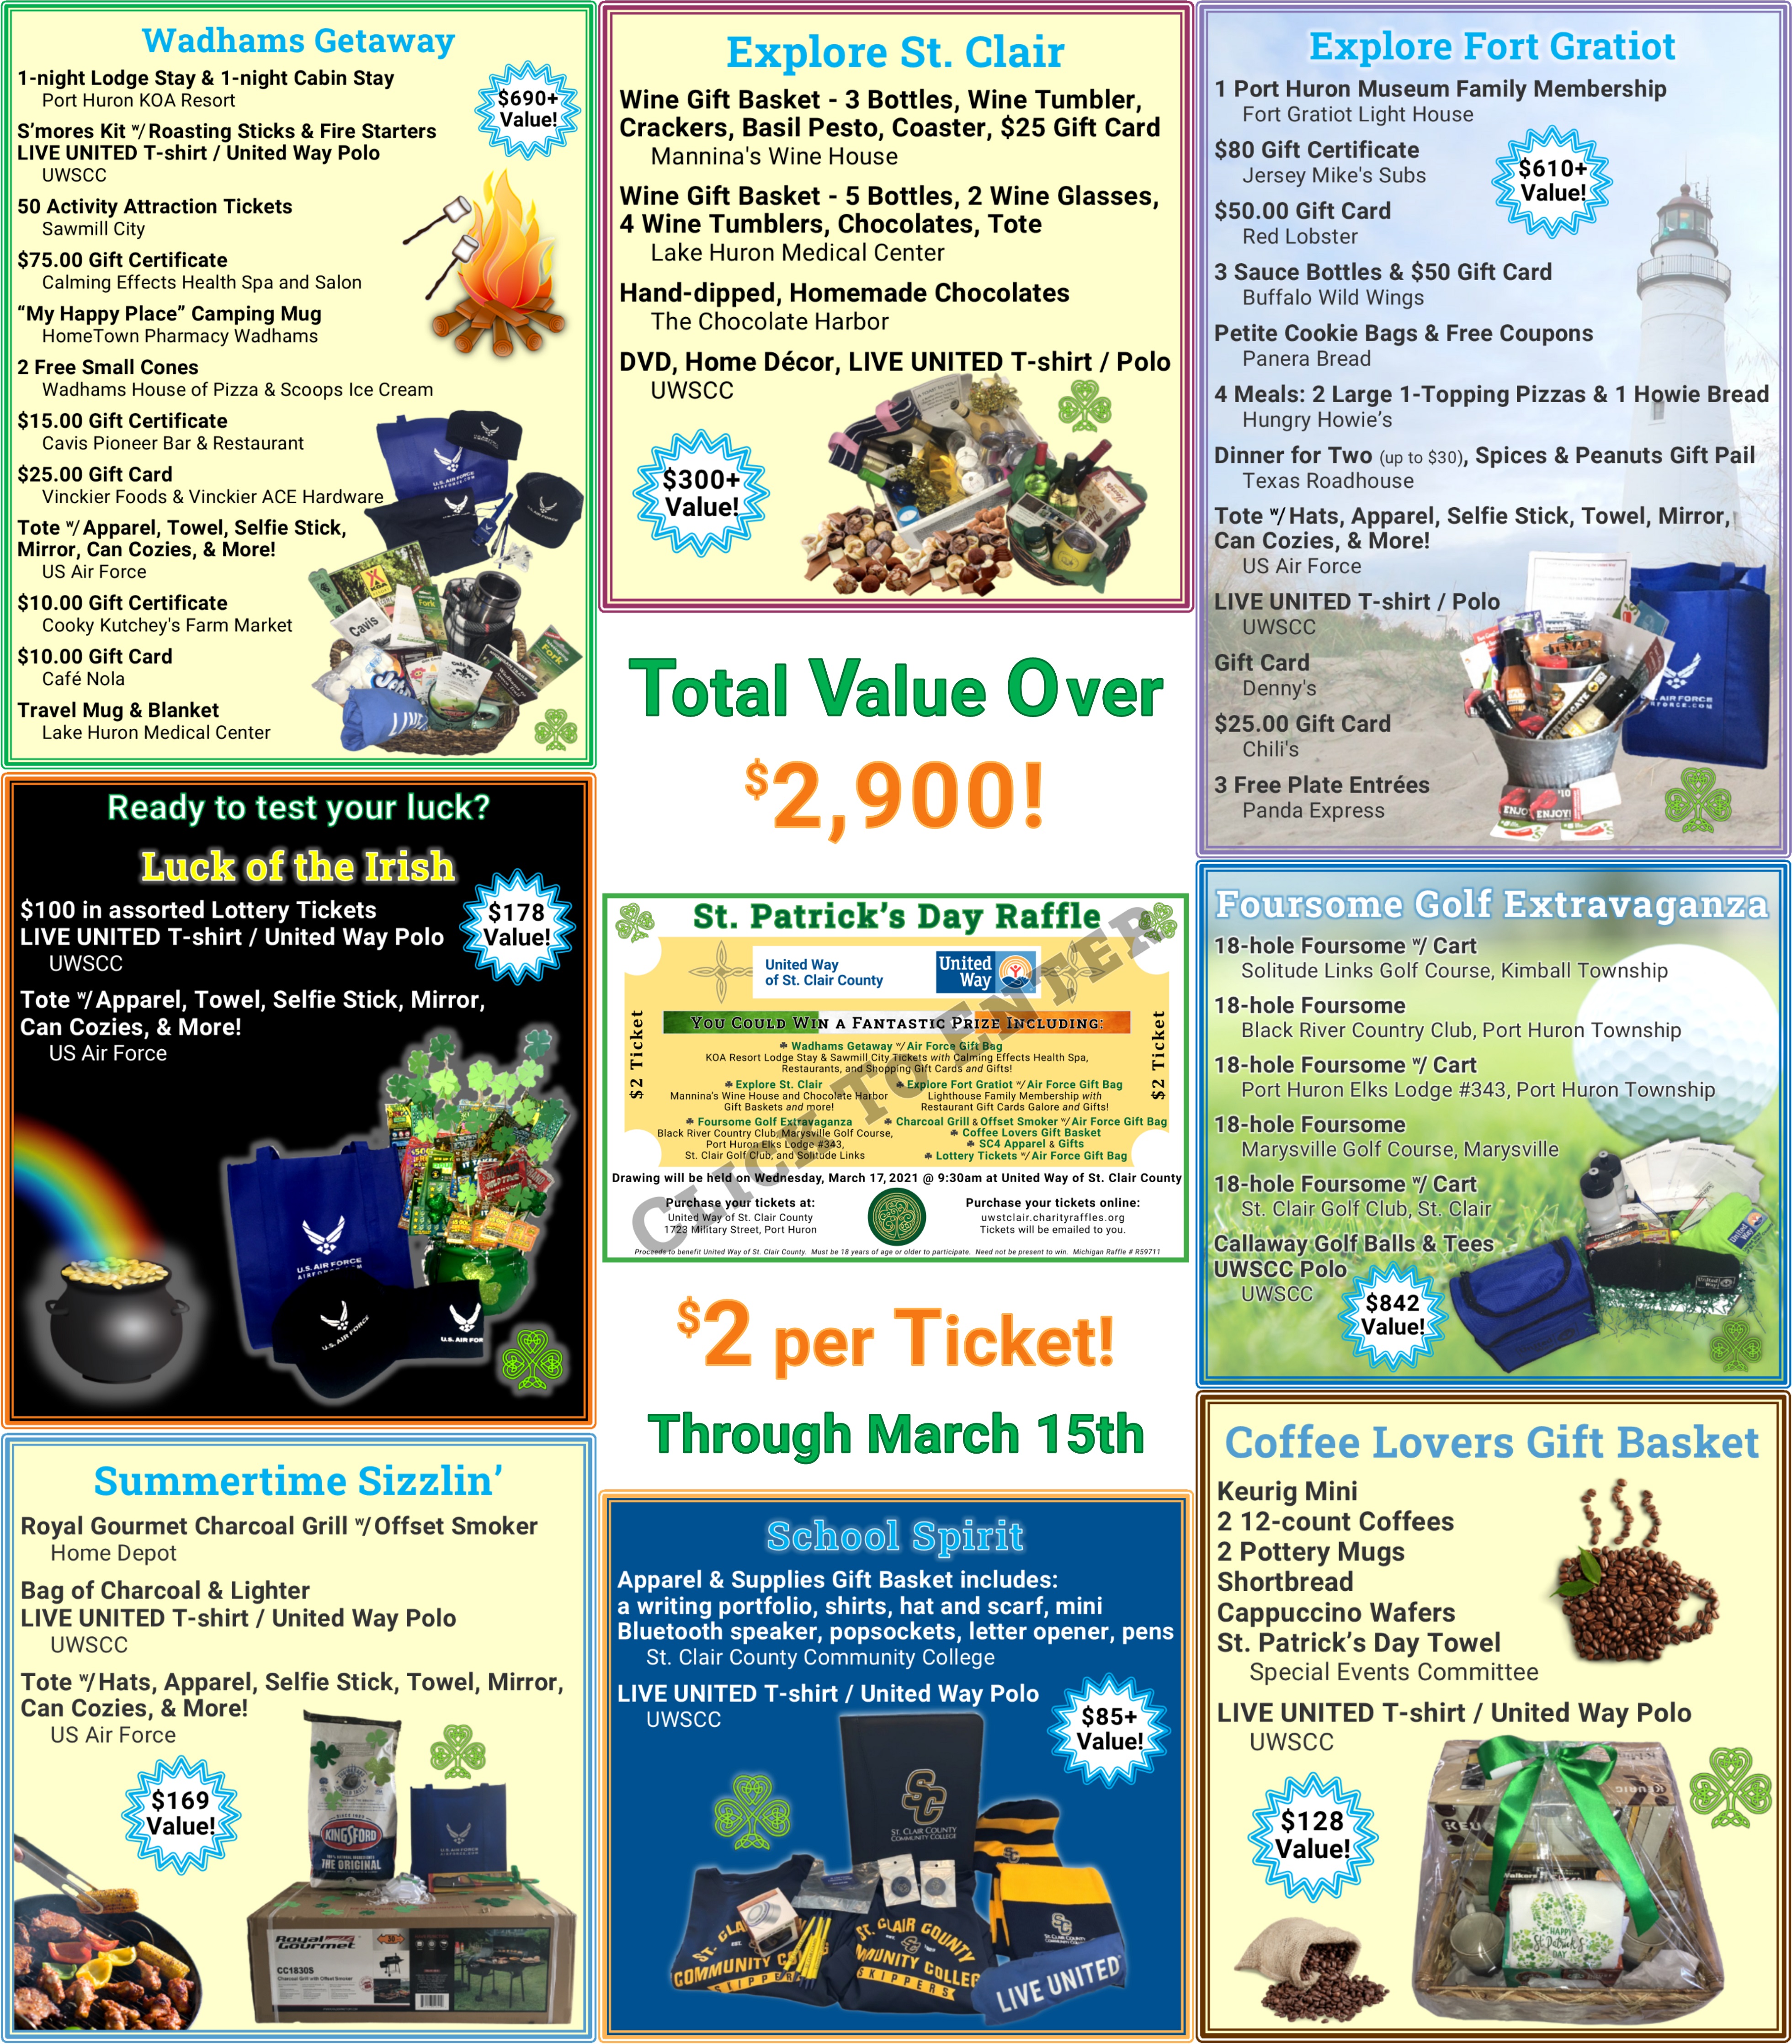 St. Patrick's Day Raffle Prizes